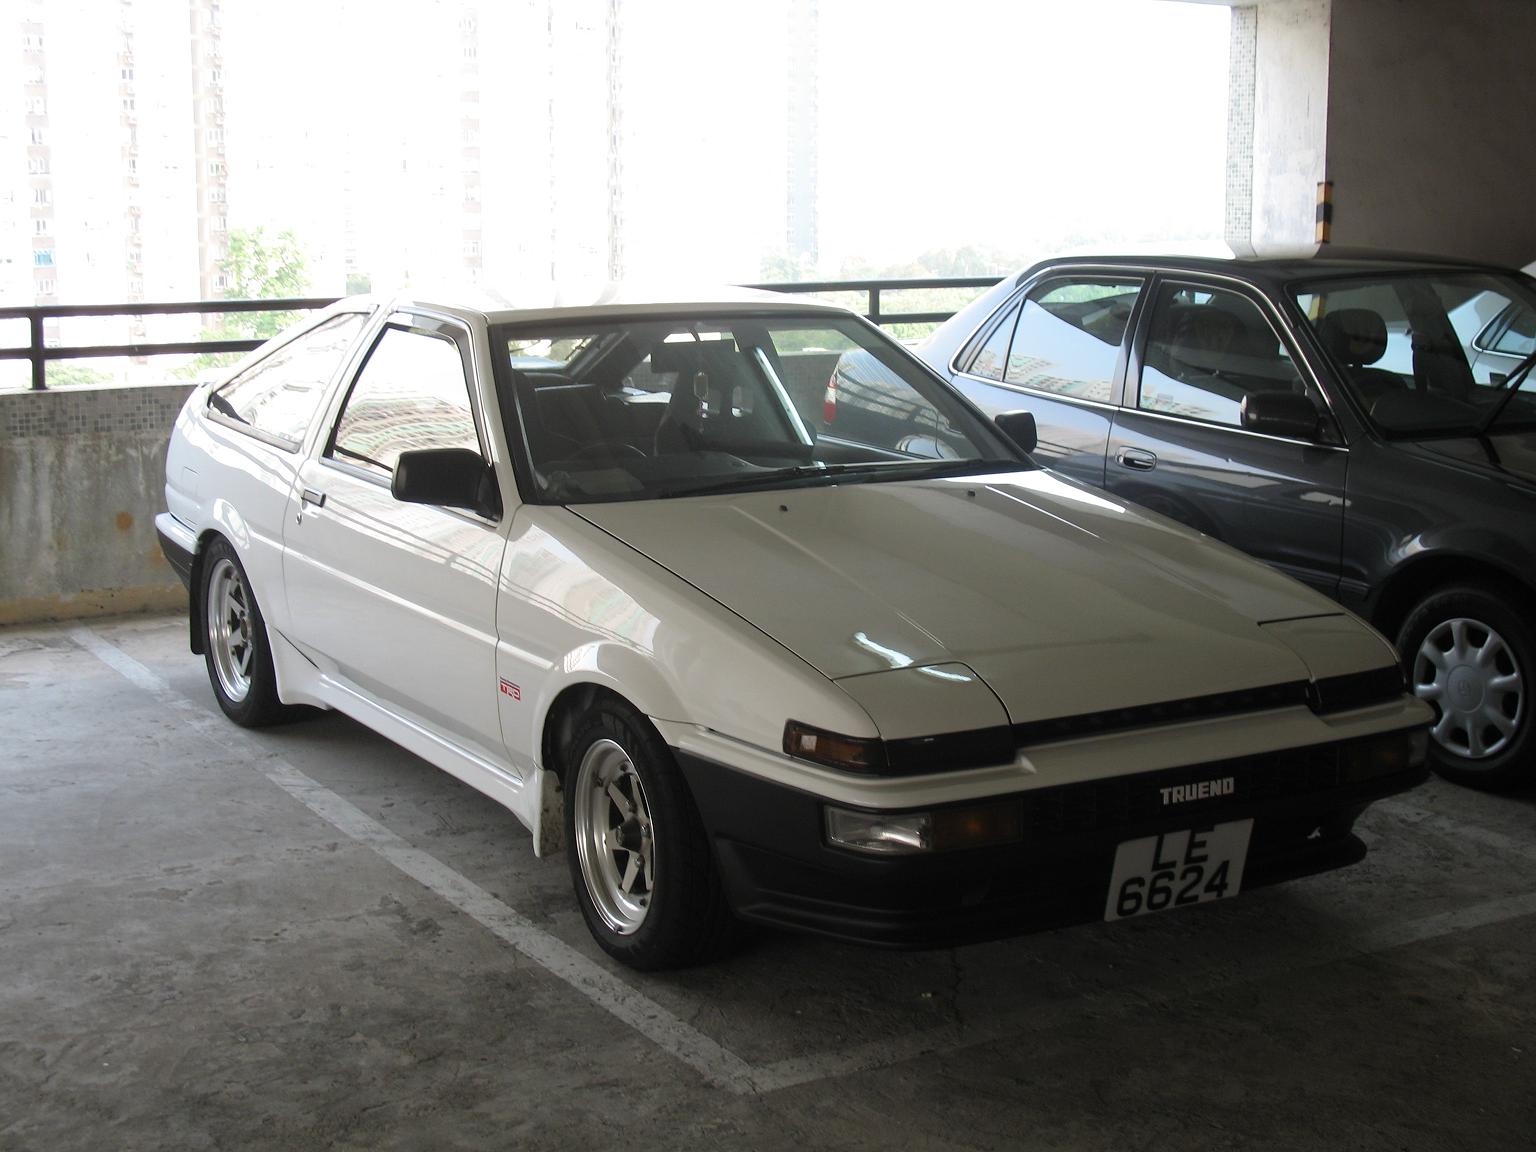 1987 Toyota corolla gts coupe